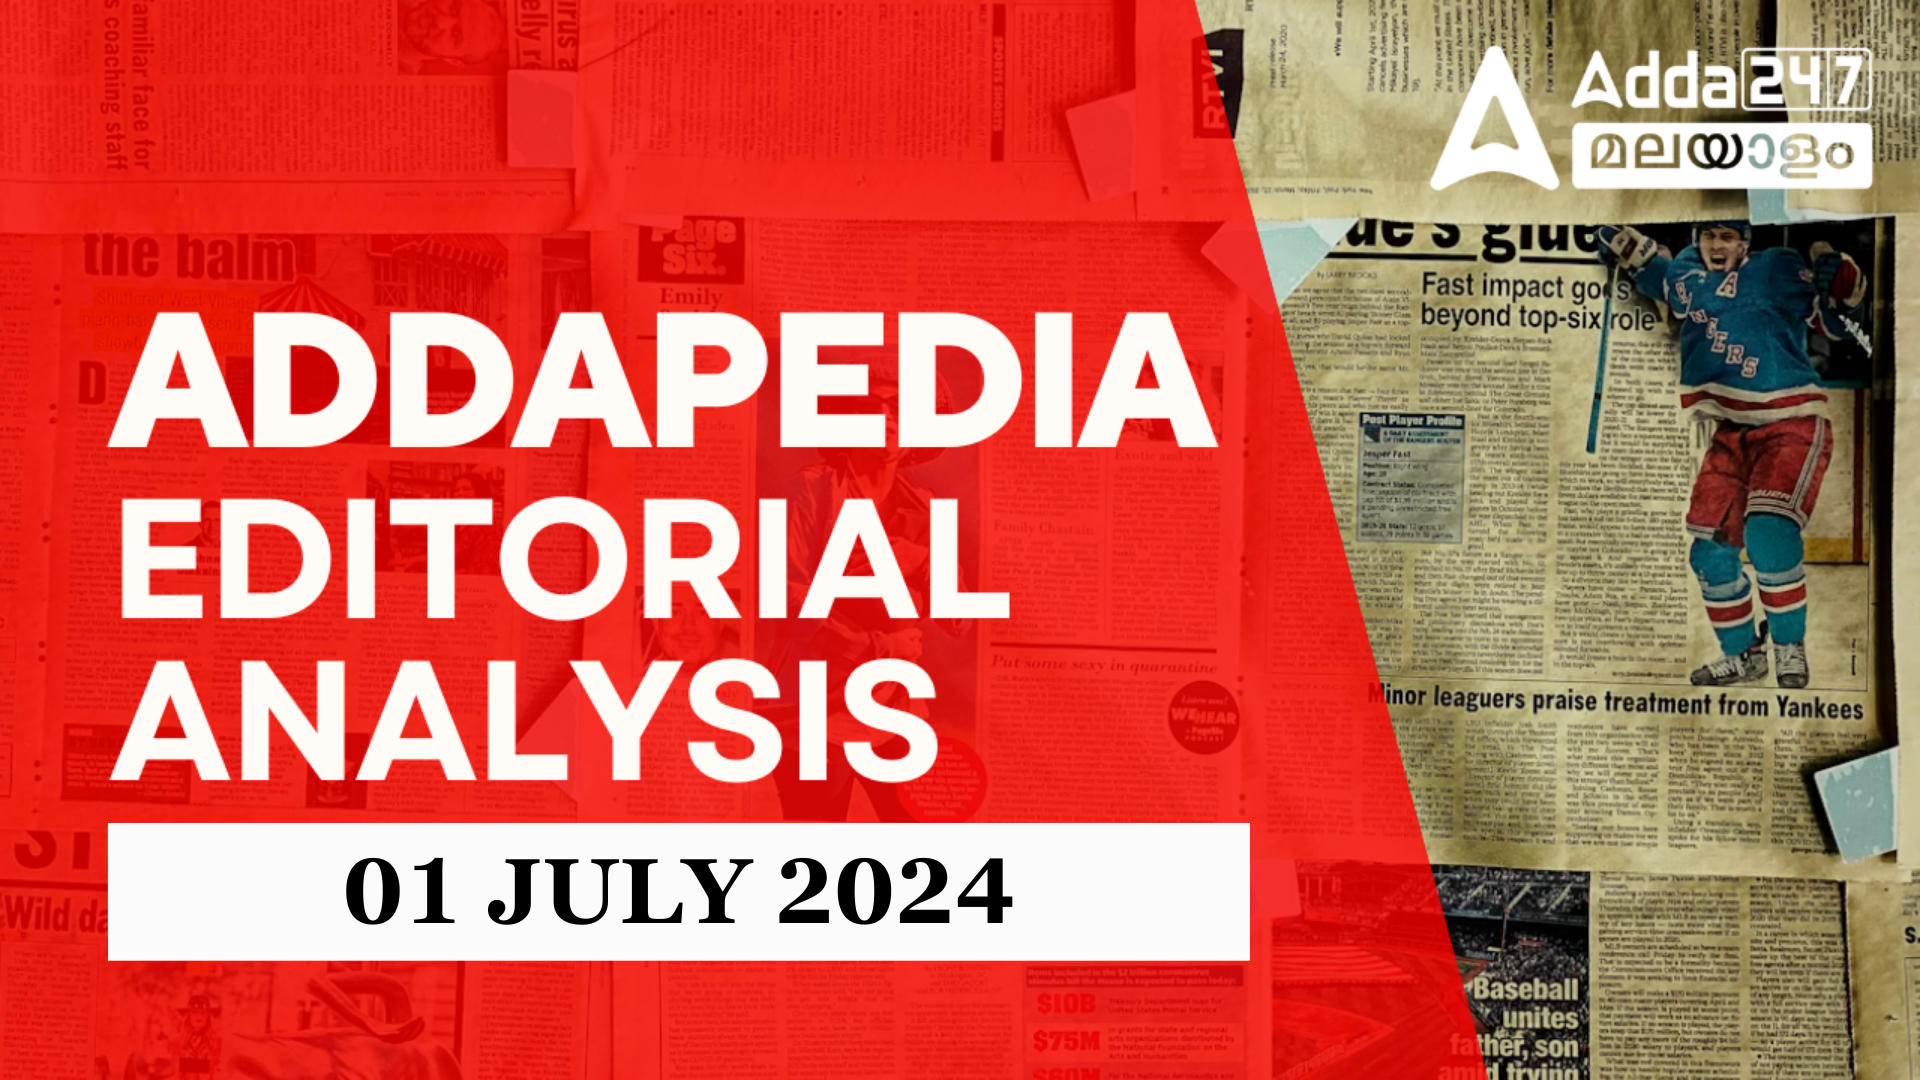 Addapedia Editorial Analysis: Daily News Editorial PDF, 01 July 2024